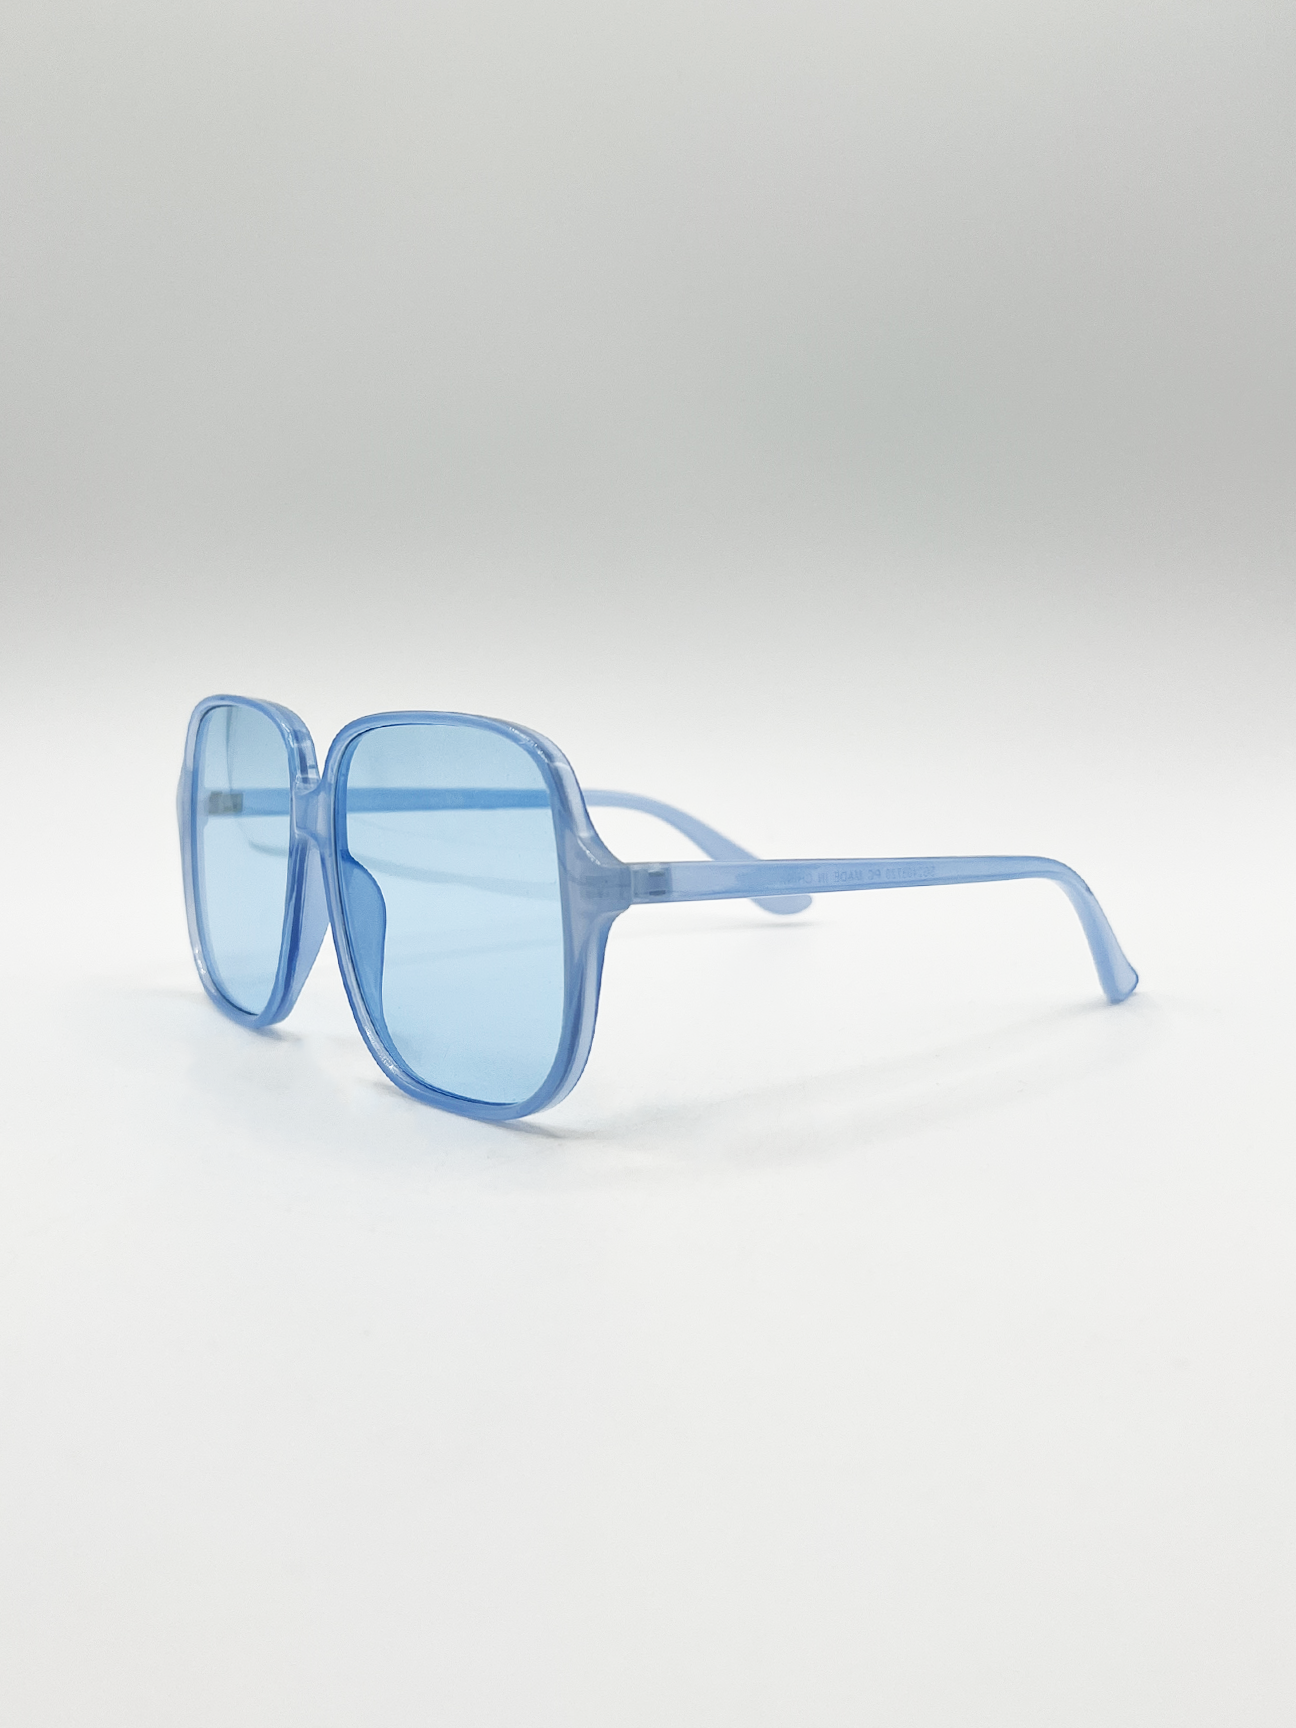 Oversized Lightweight Square Frame Sunglasses in Blue